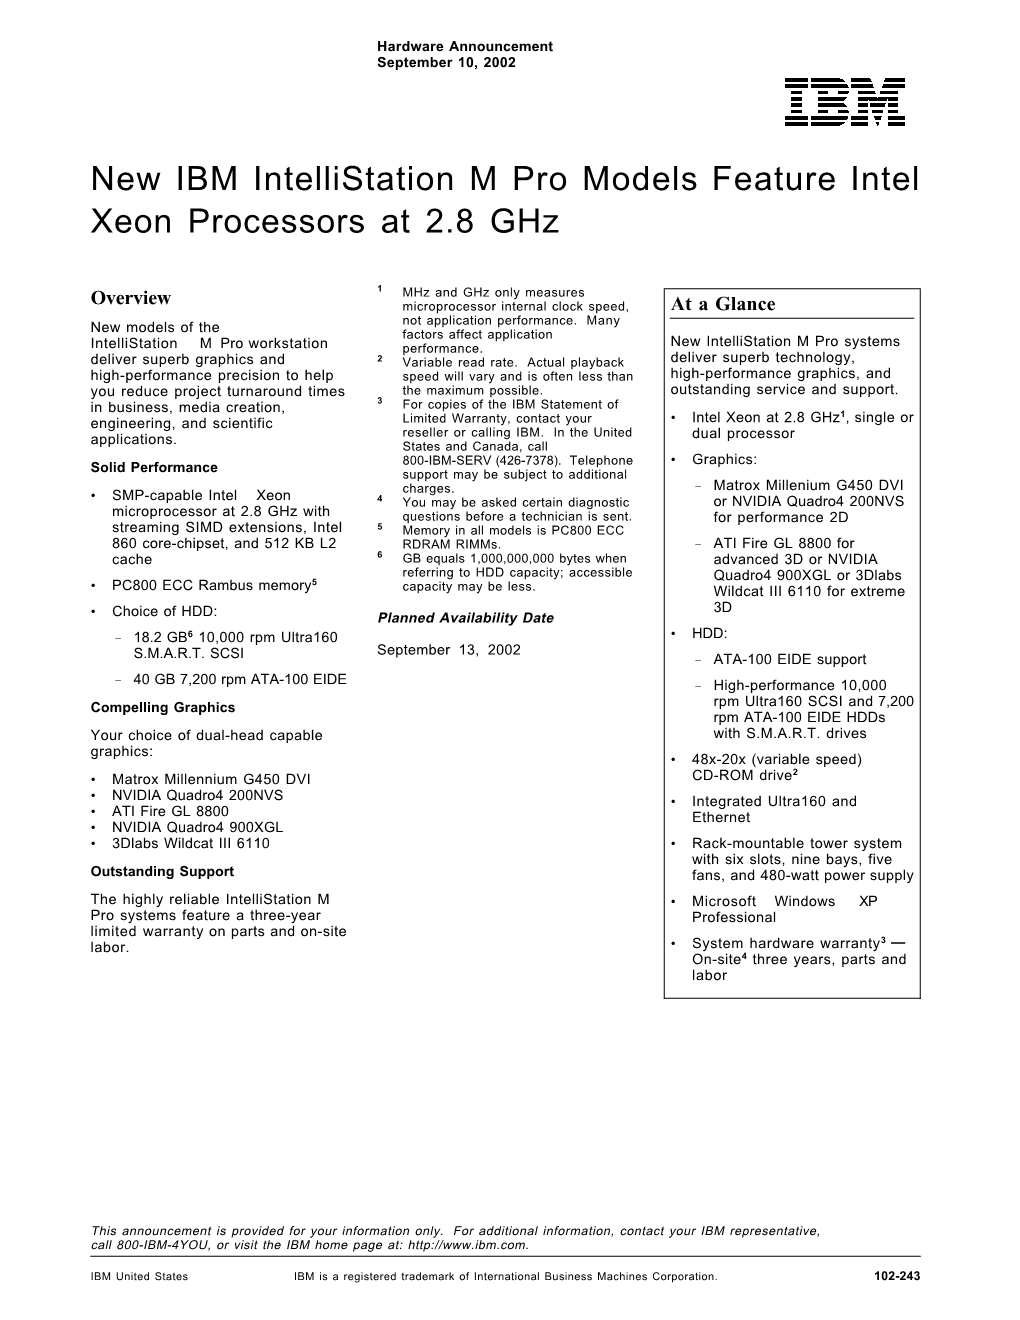 New IBM Intellistation M Pro Models Feature Intel Xeon Processors at 2.8 Ghz